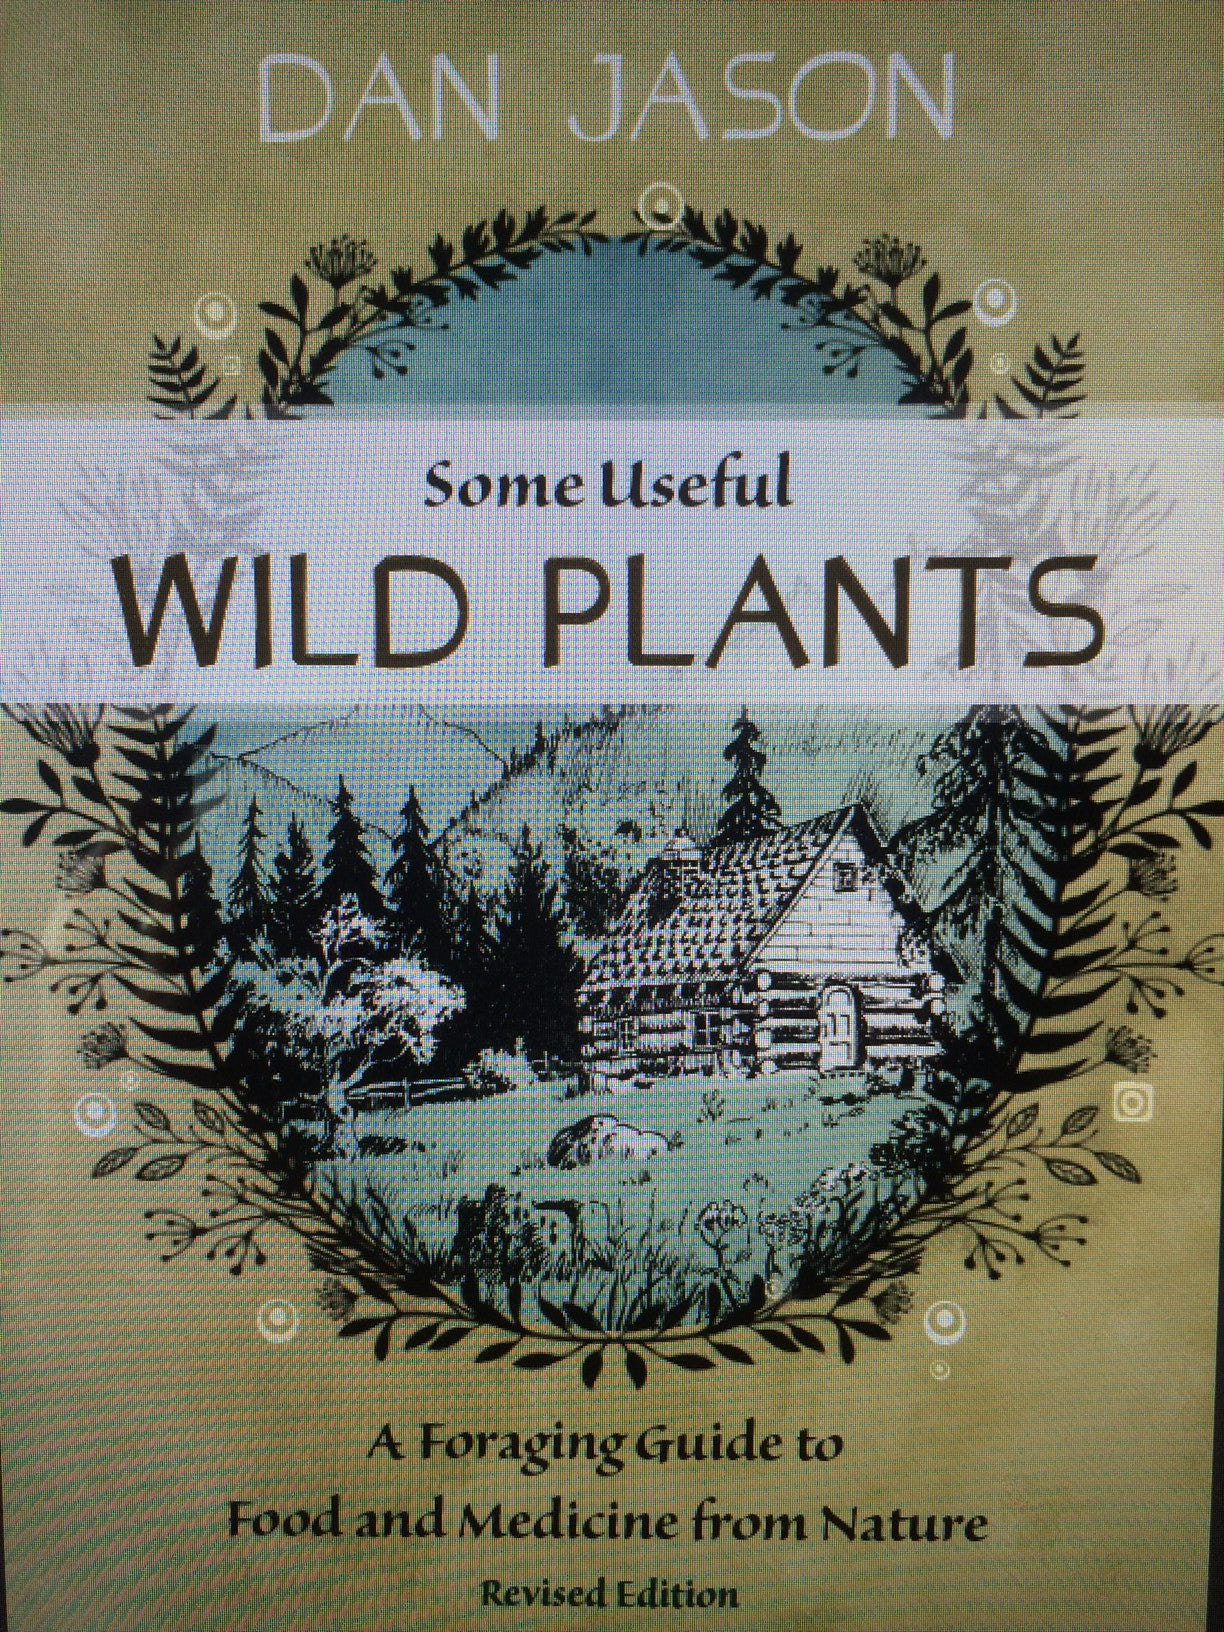 Some Useful Wild Plants by Dan Jason